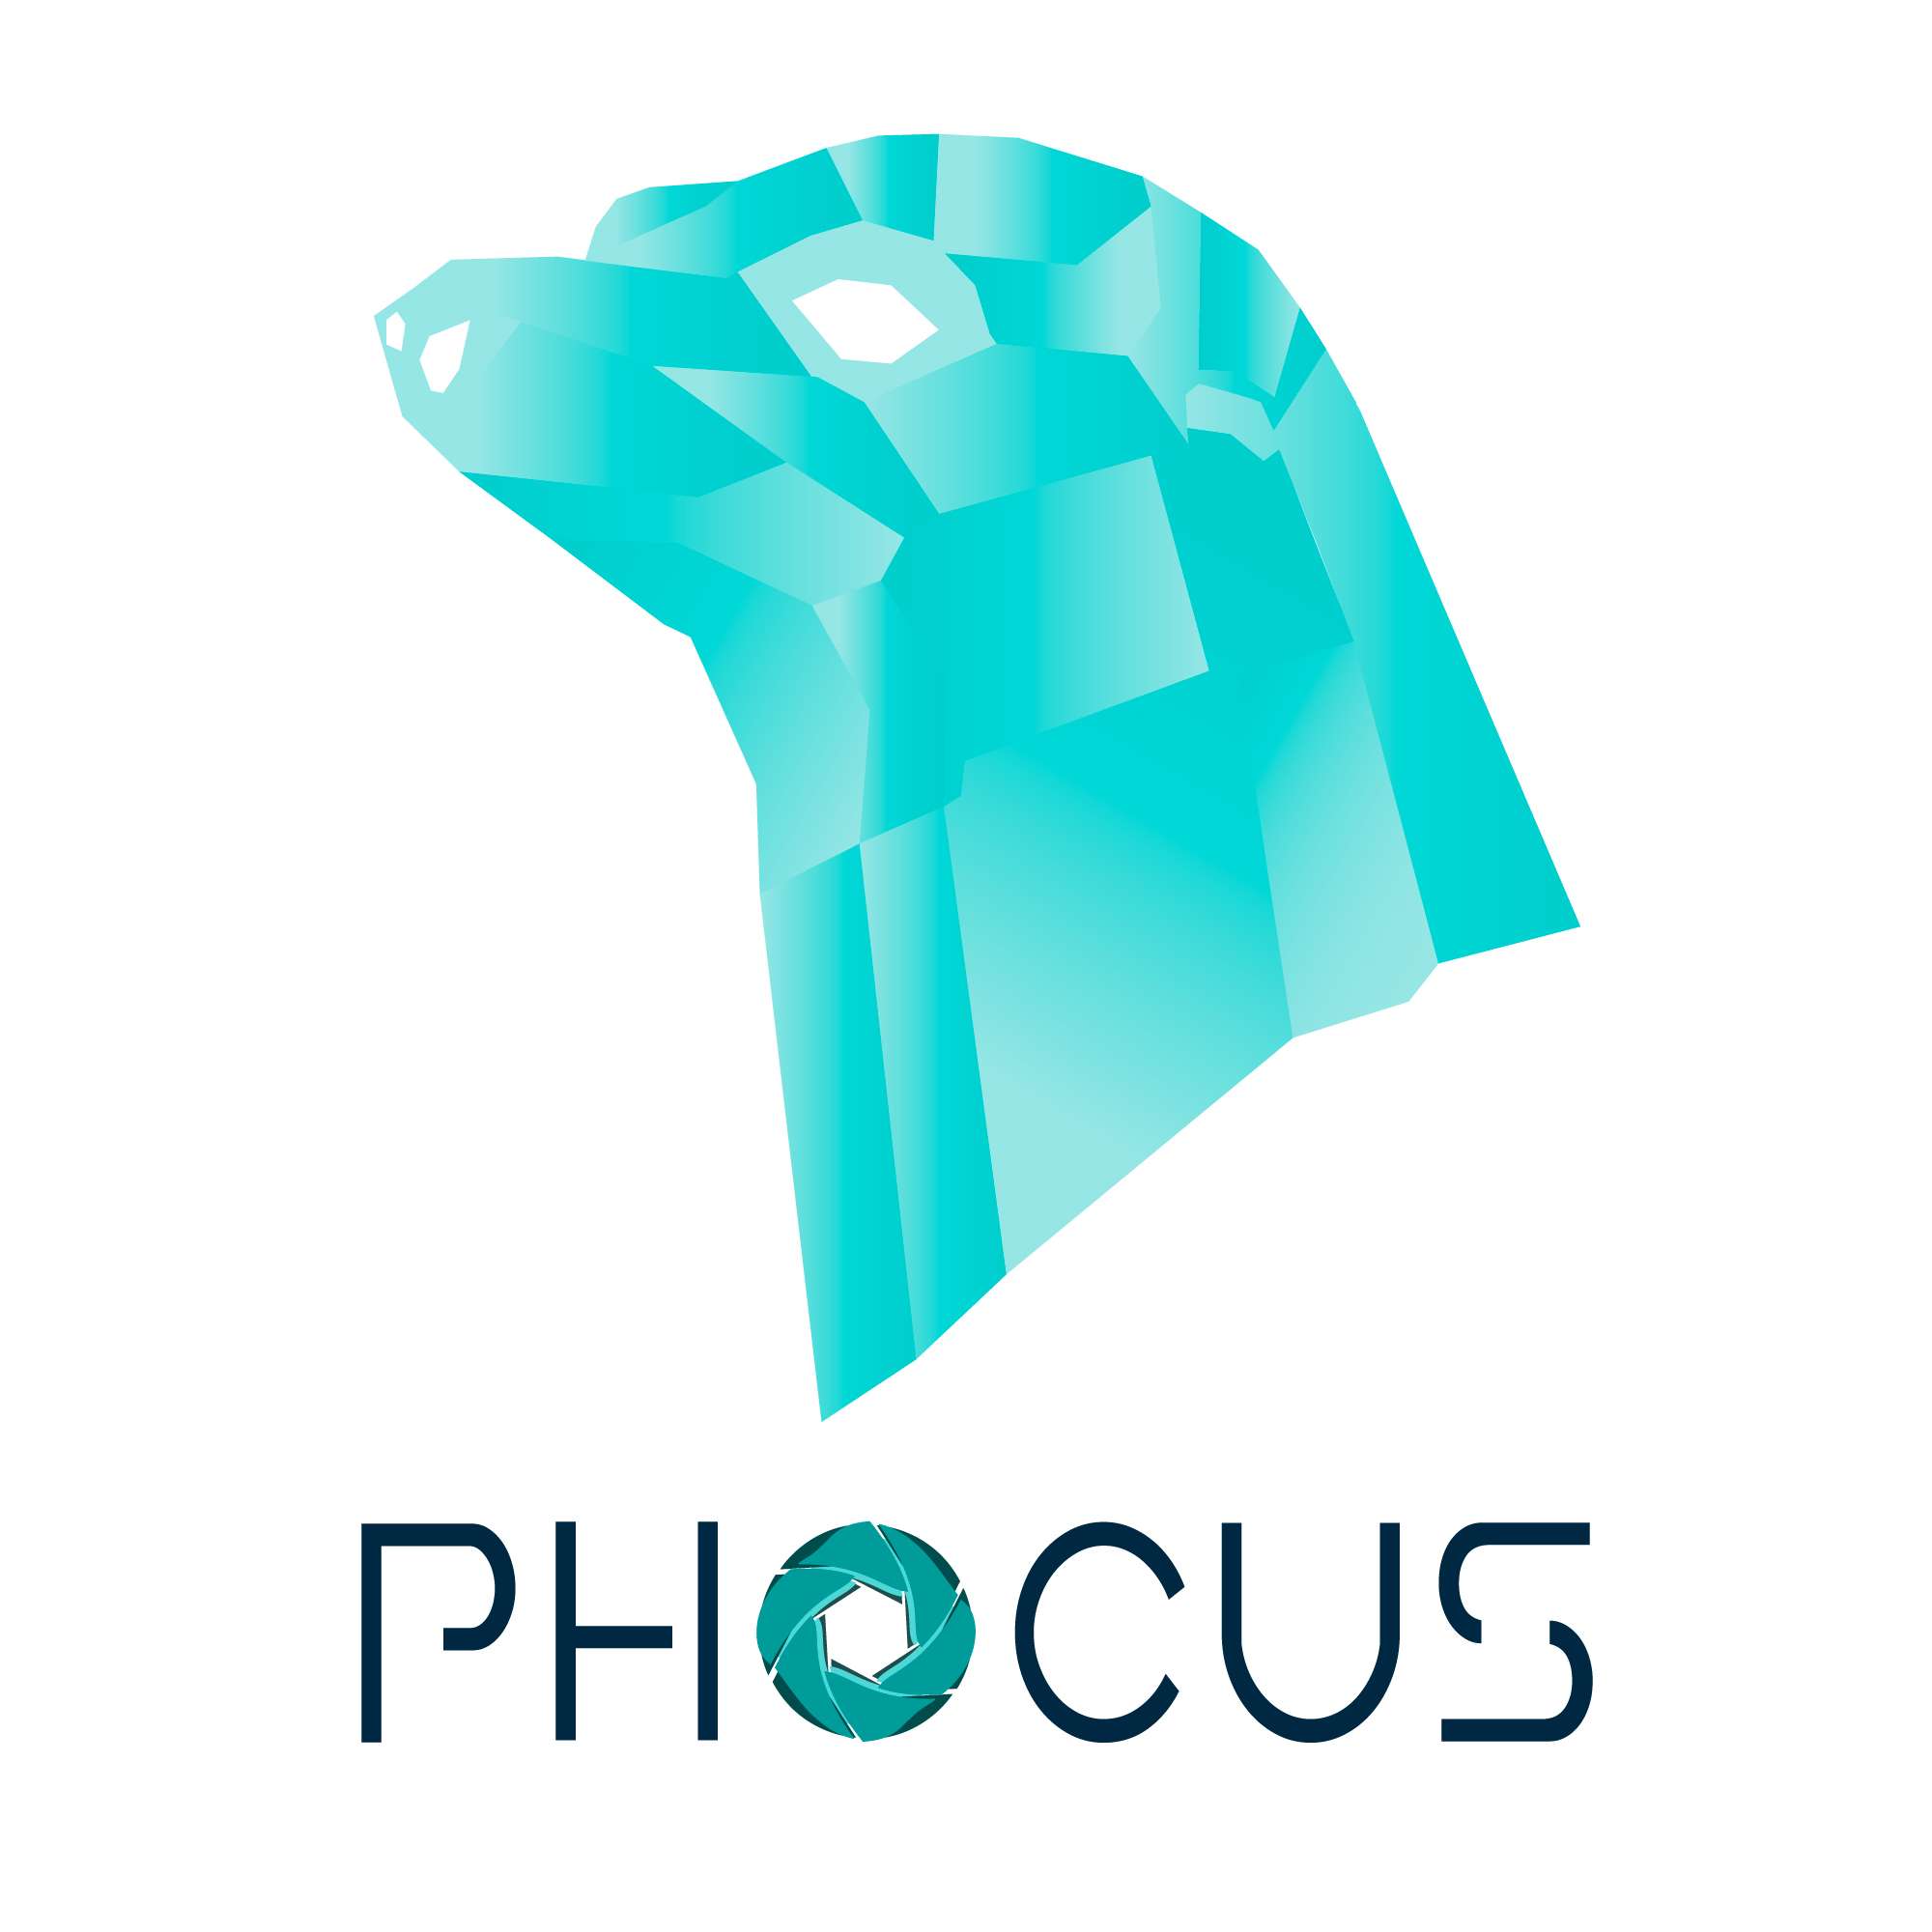 Phocus – Photographe & Vidéaste